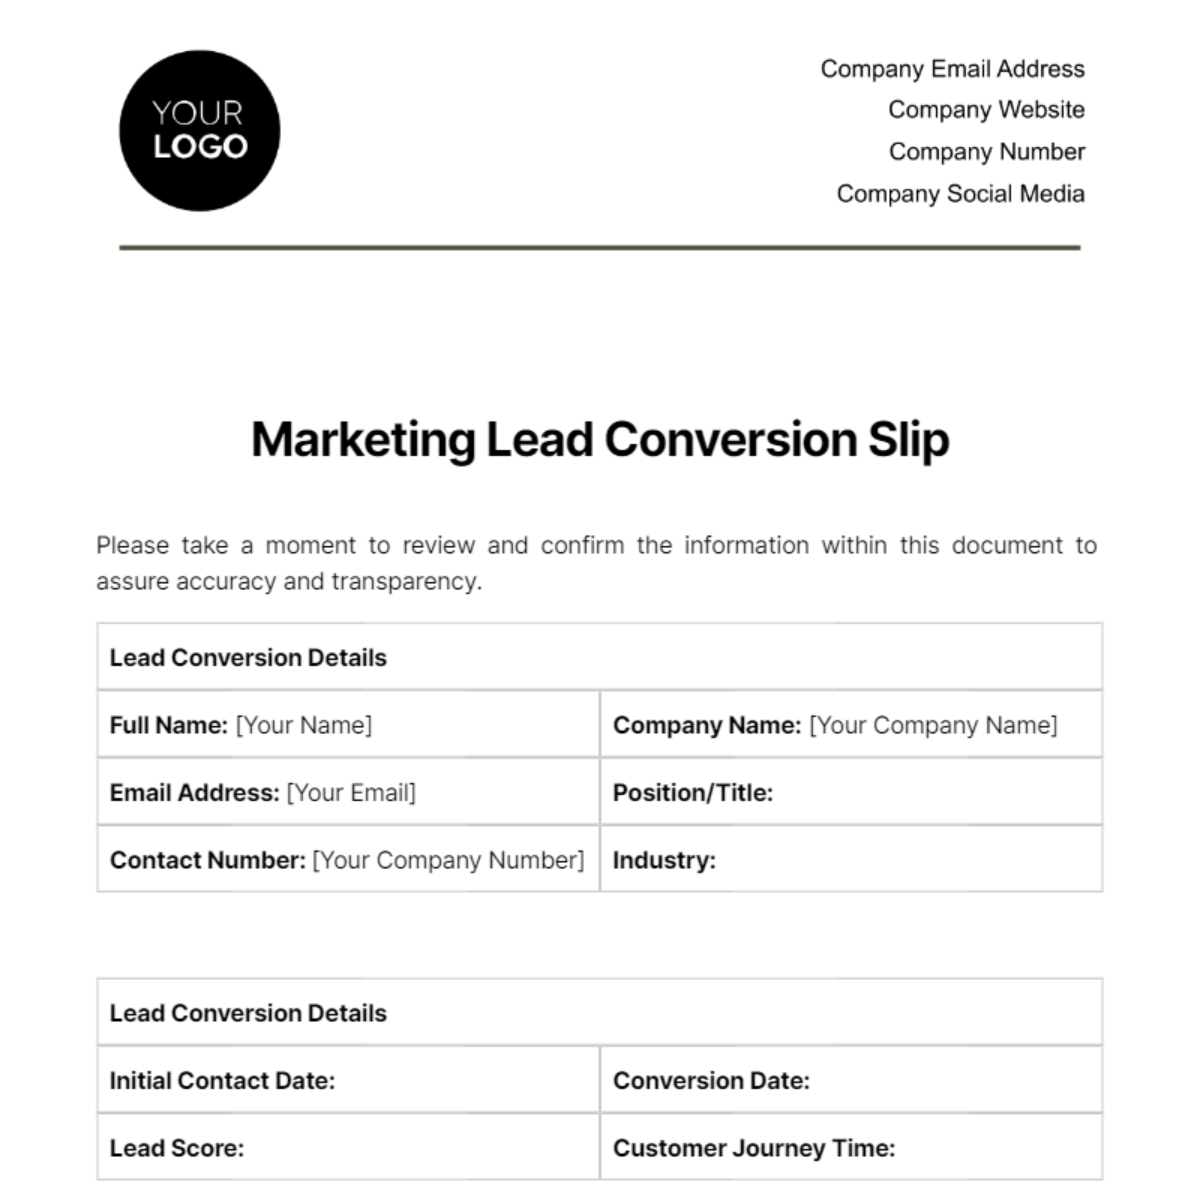 Free Marketing Lead Conversion Slip Template